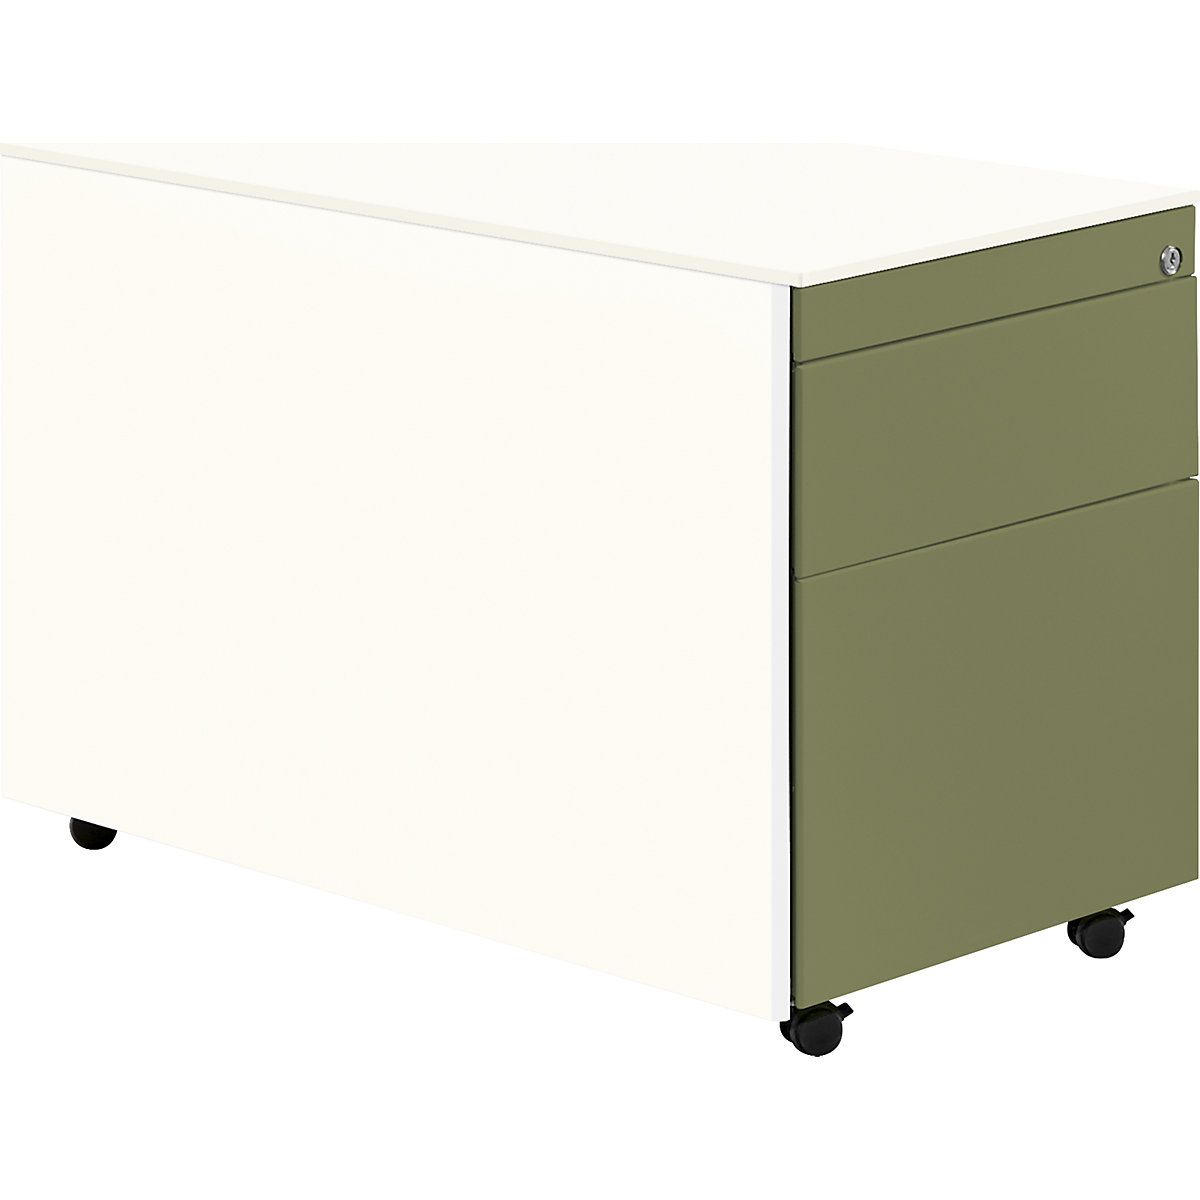 Zásuvkový kontejner s koly – mauser, v x h 570 x 800 mm, 1 zásuvka na materiál, 1 kartotéka pro závěsné složky, čistá bílá / rákosová zelená / čistá bílá-11